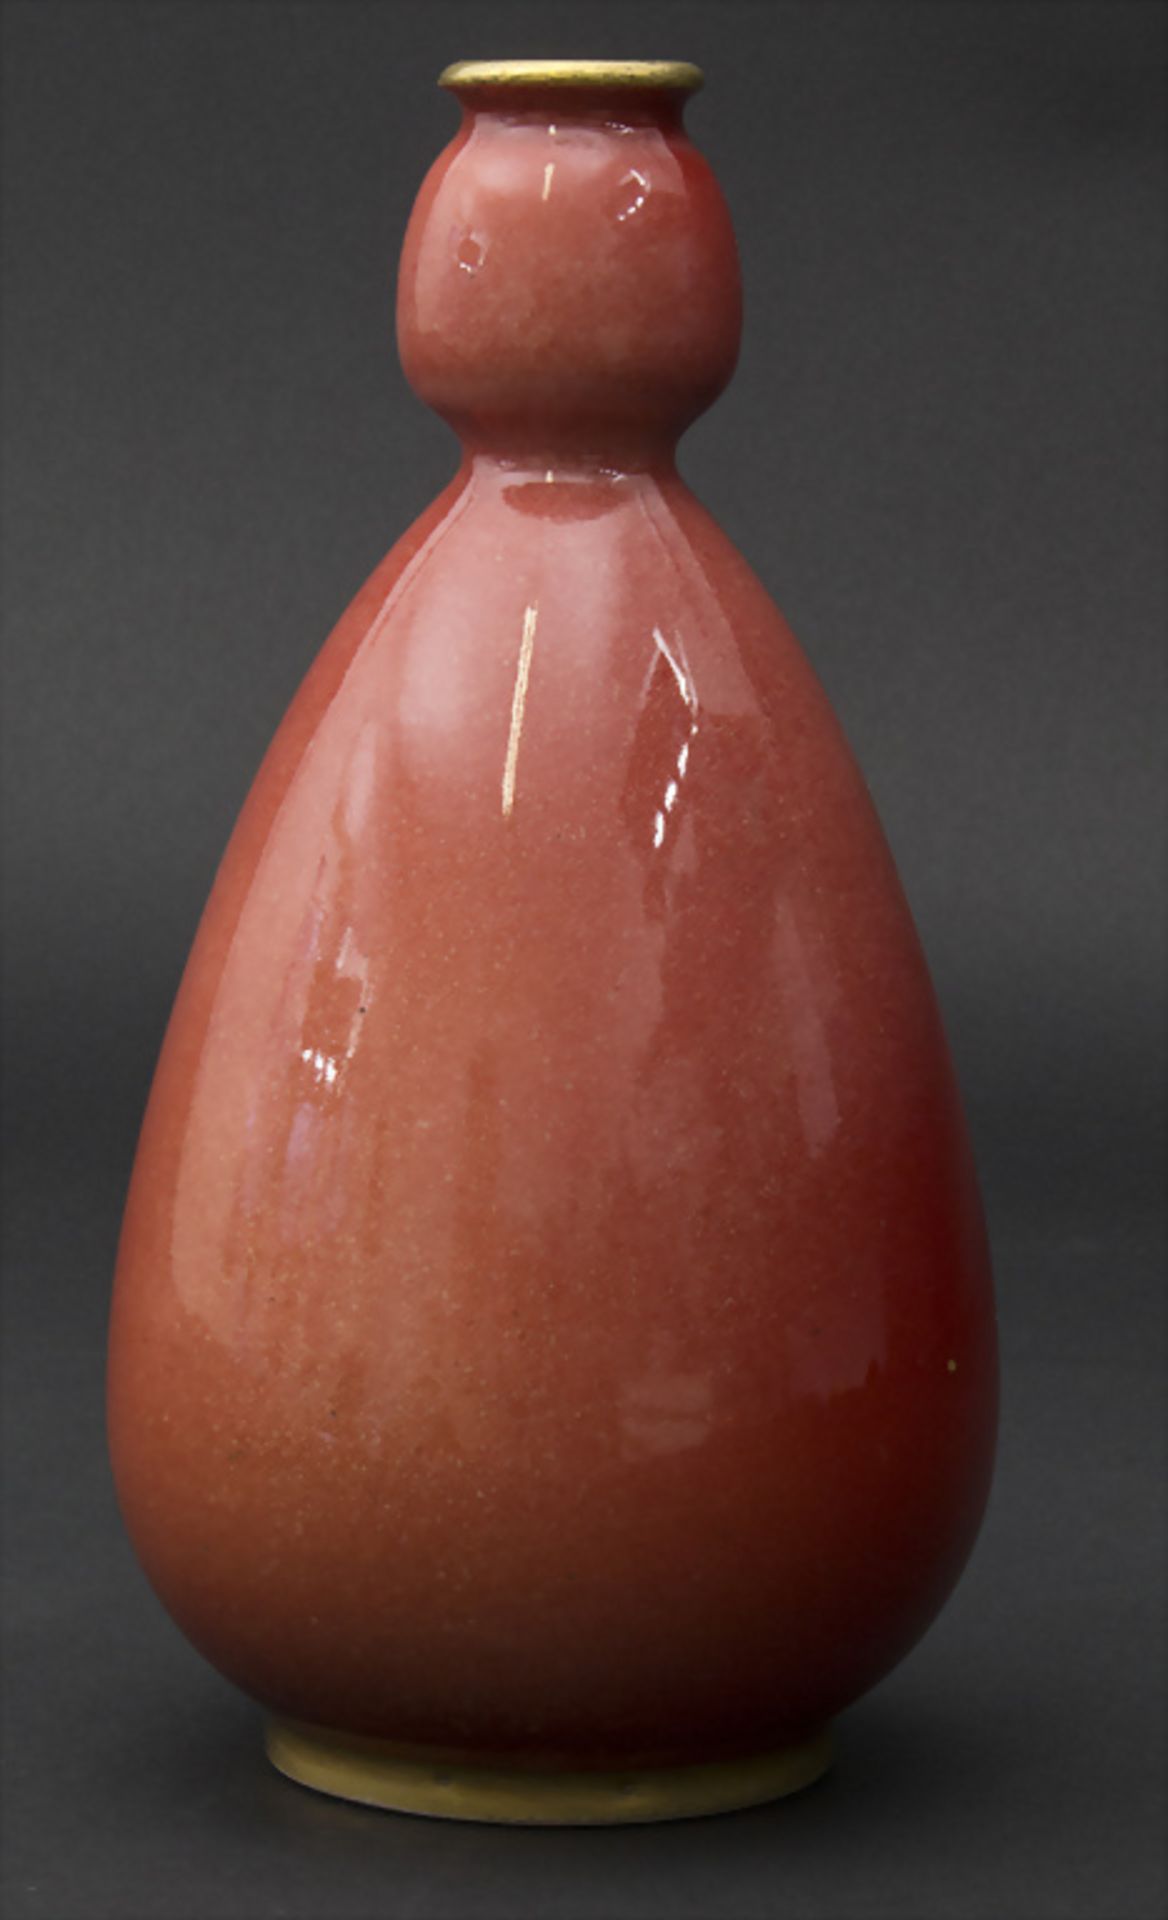 Rote Flaschenkürbisvase / A red pumpin shaped vase, Zsolnay, Pecs, um 1900 - Image 2 of 4